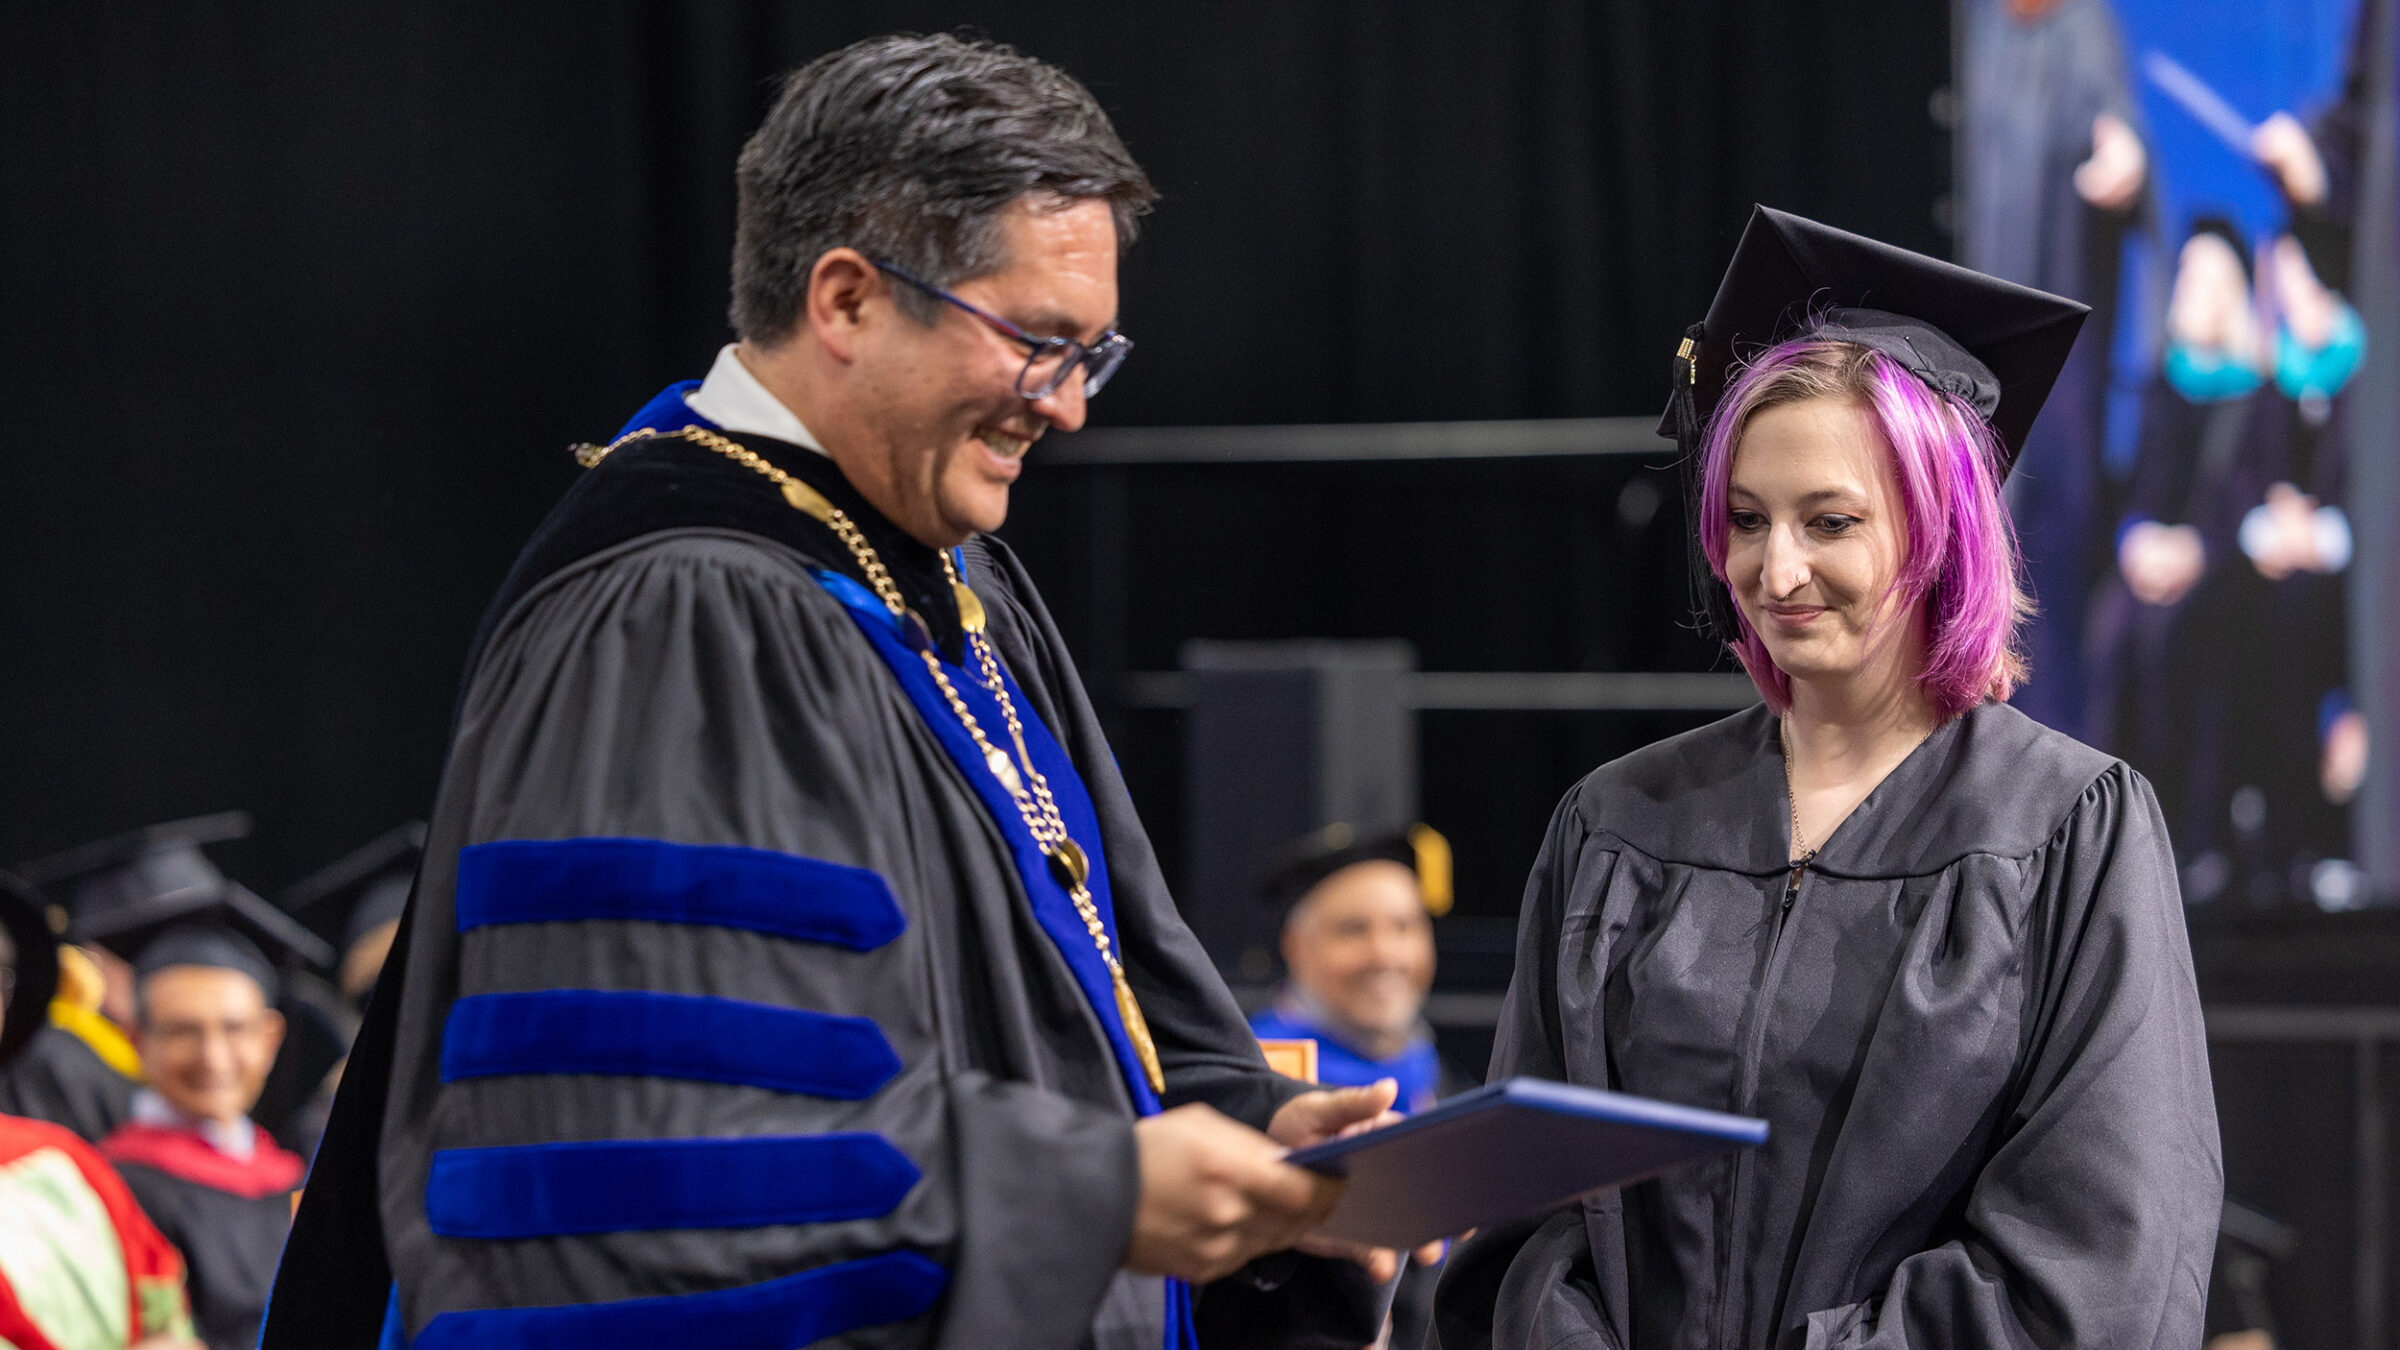 President Hernandez presents a diploma to the graduating senior